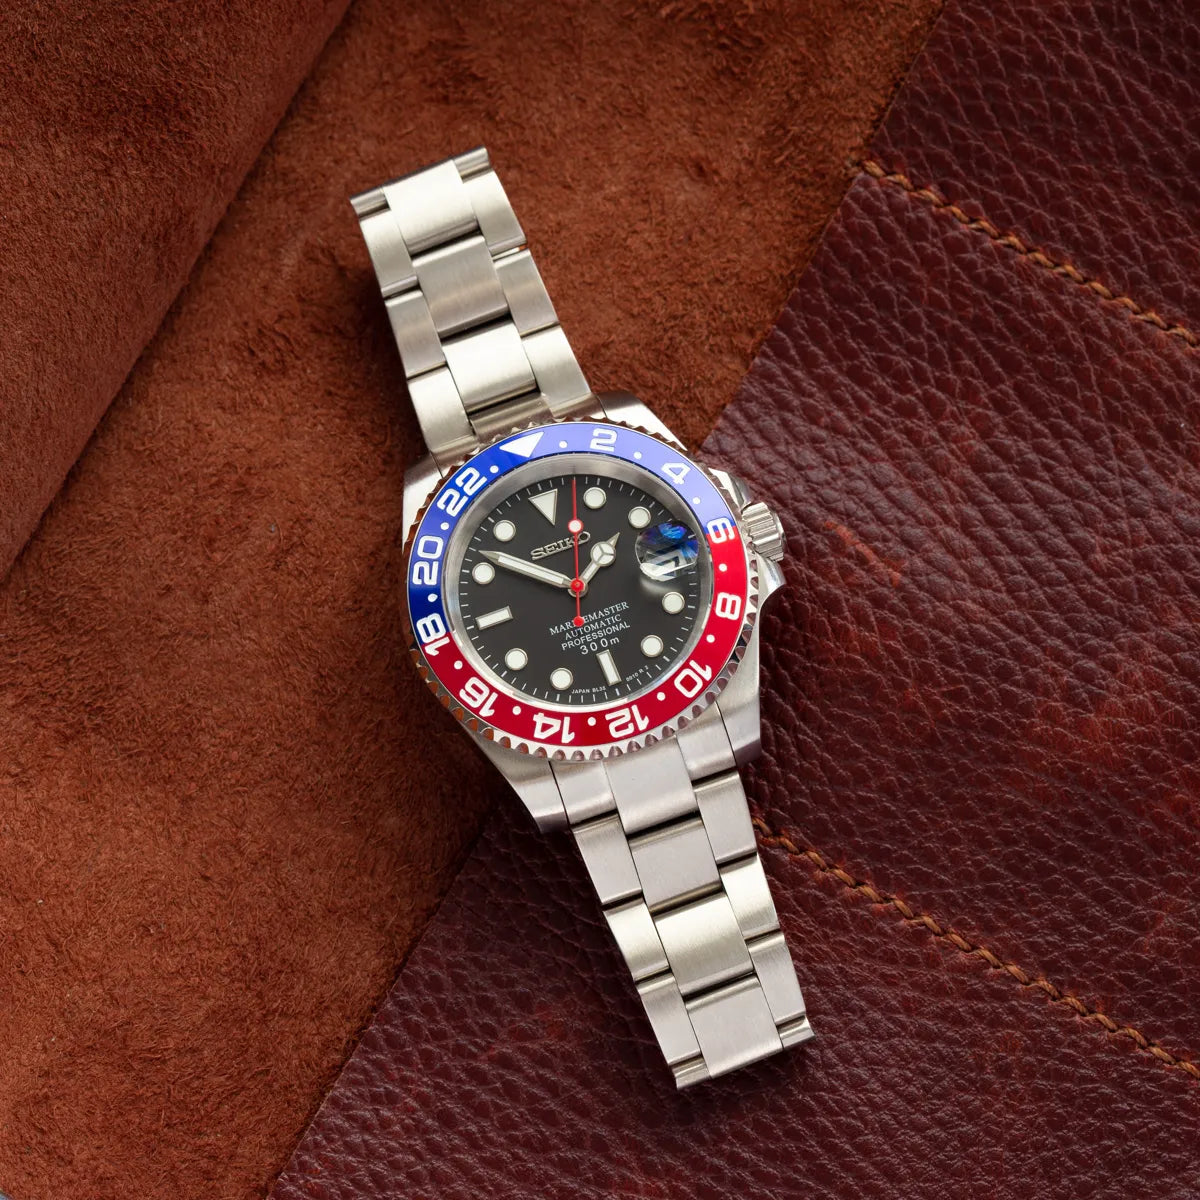 Seiko Mod Pepsi Submariner Watch - Pepsi Watch